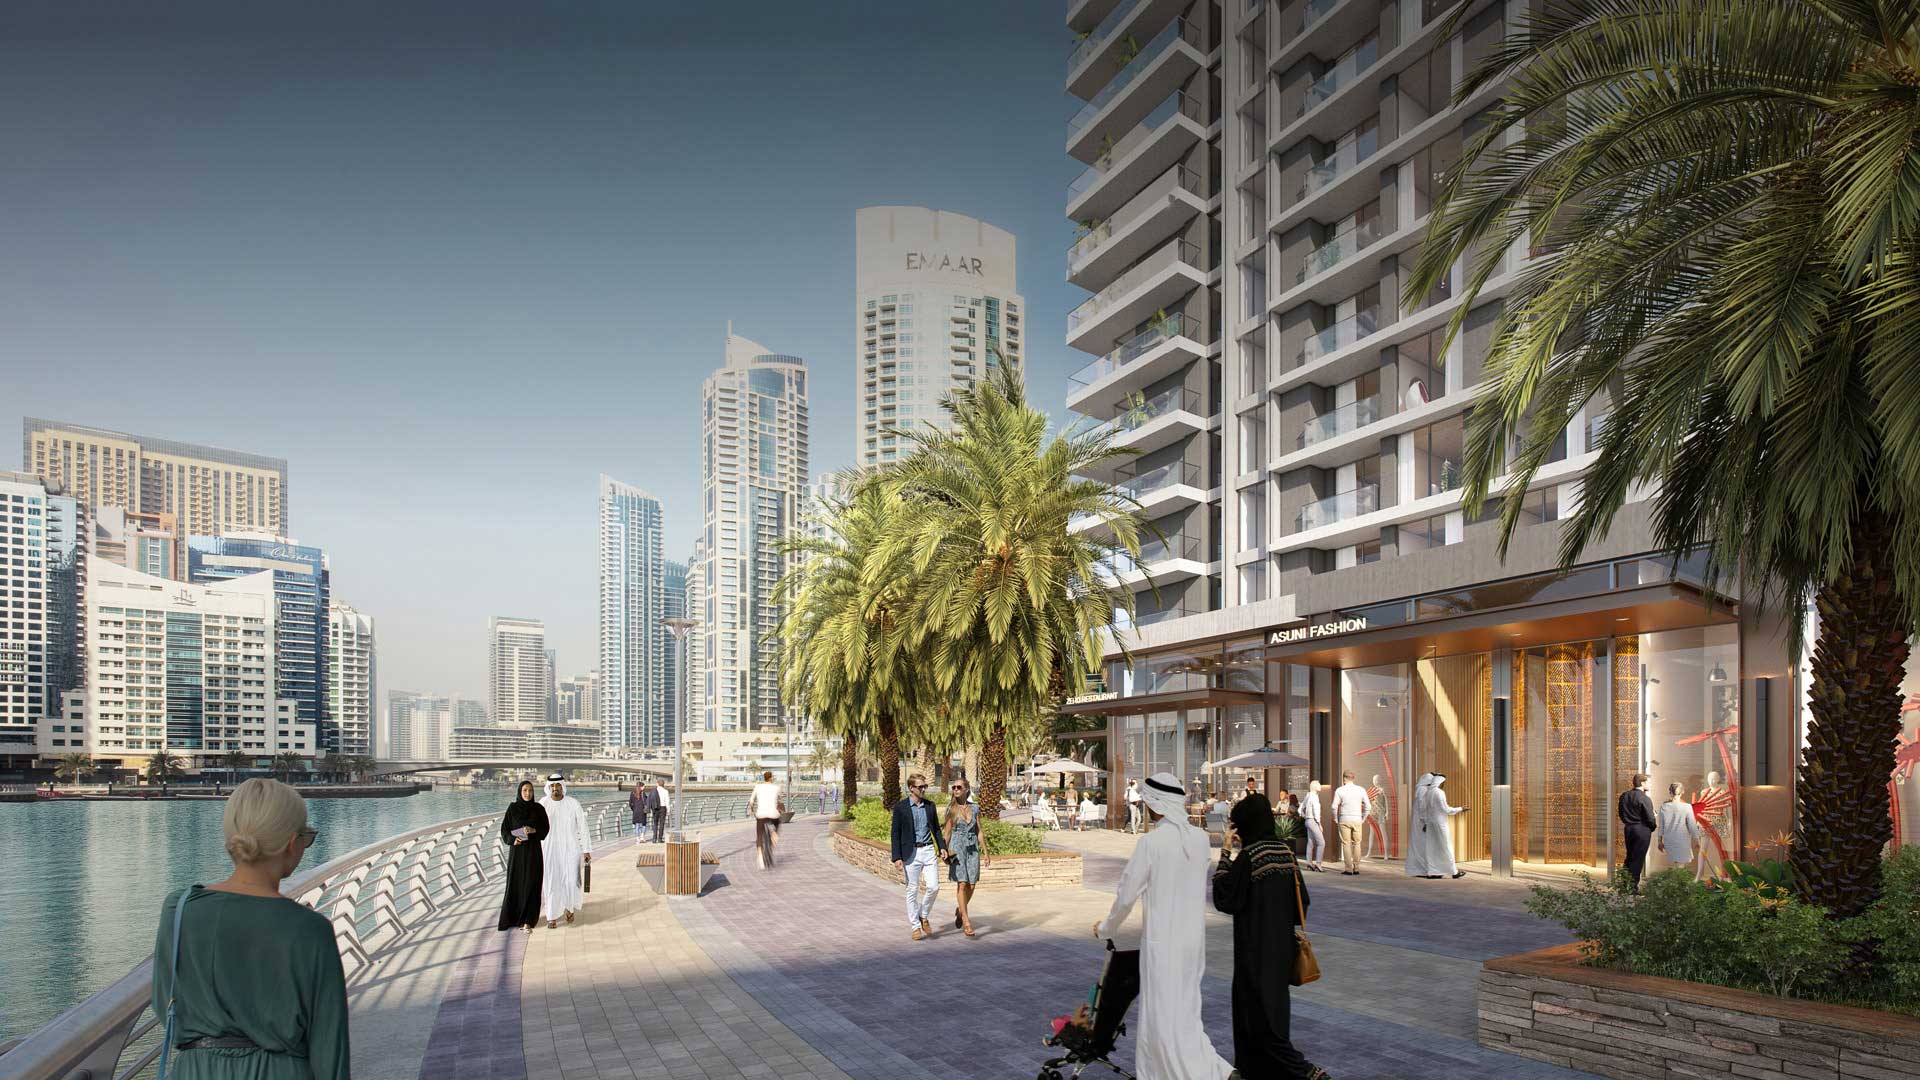 MARINA SHORES by Emaar Properties in Dubai Marina, Dubai - 5